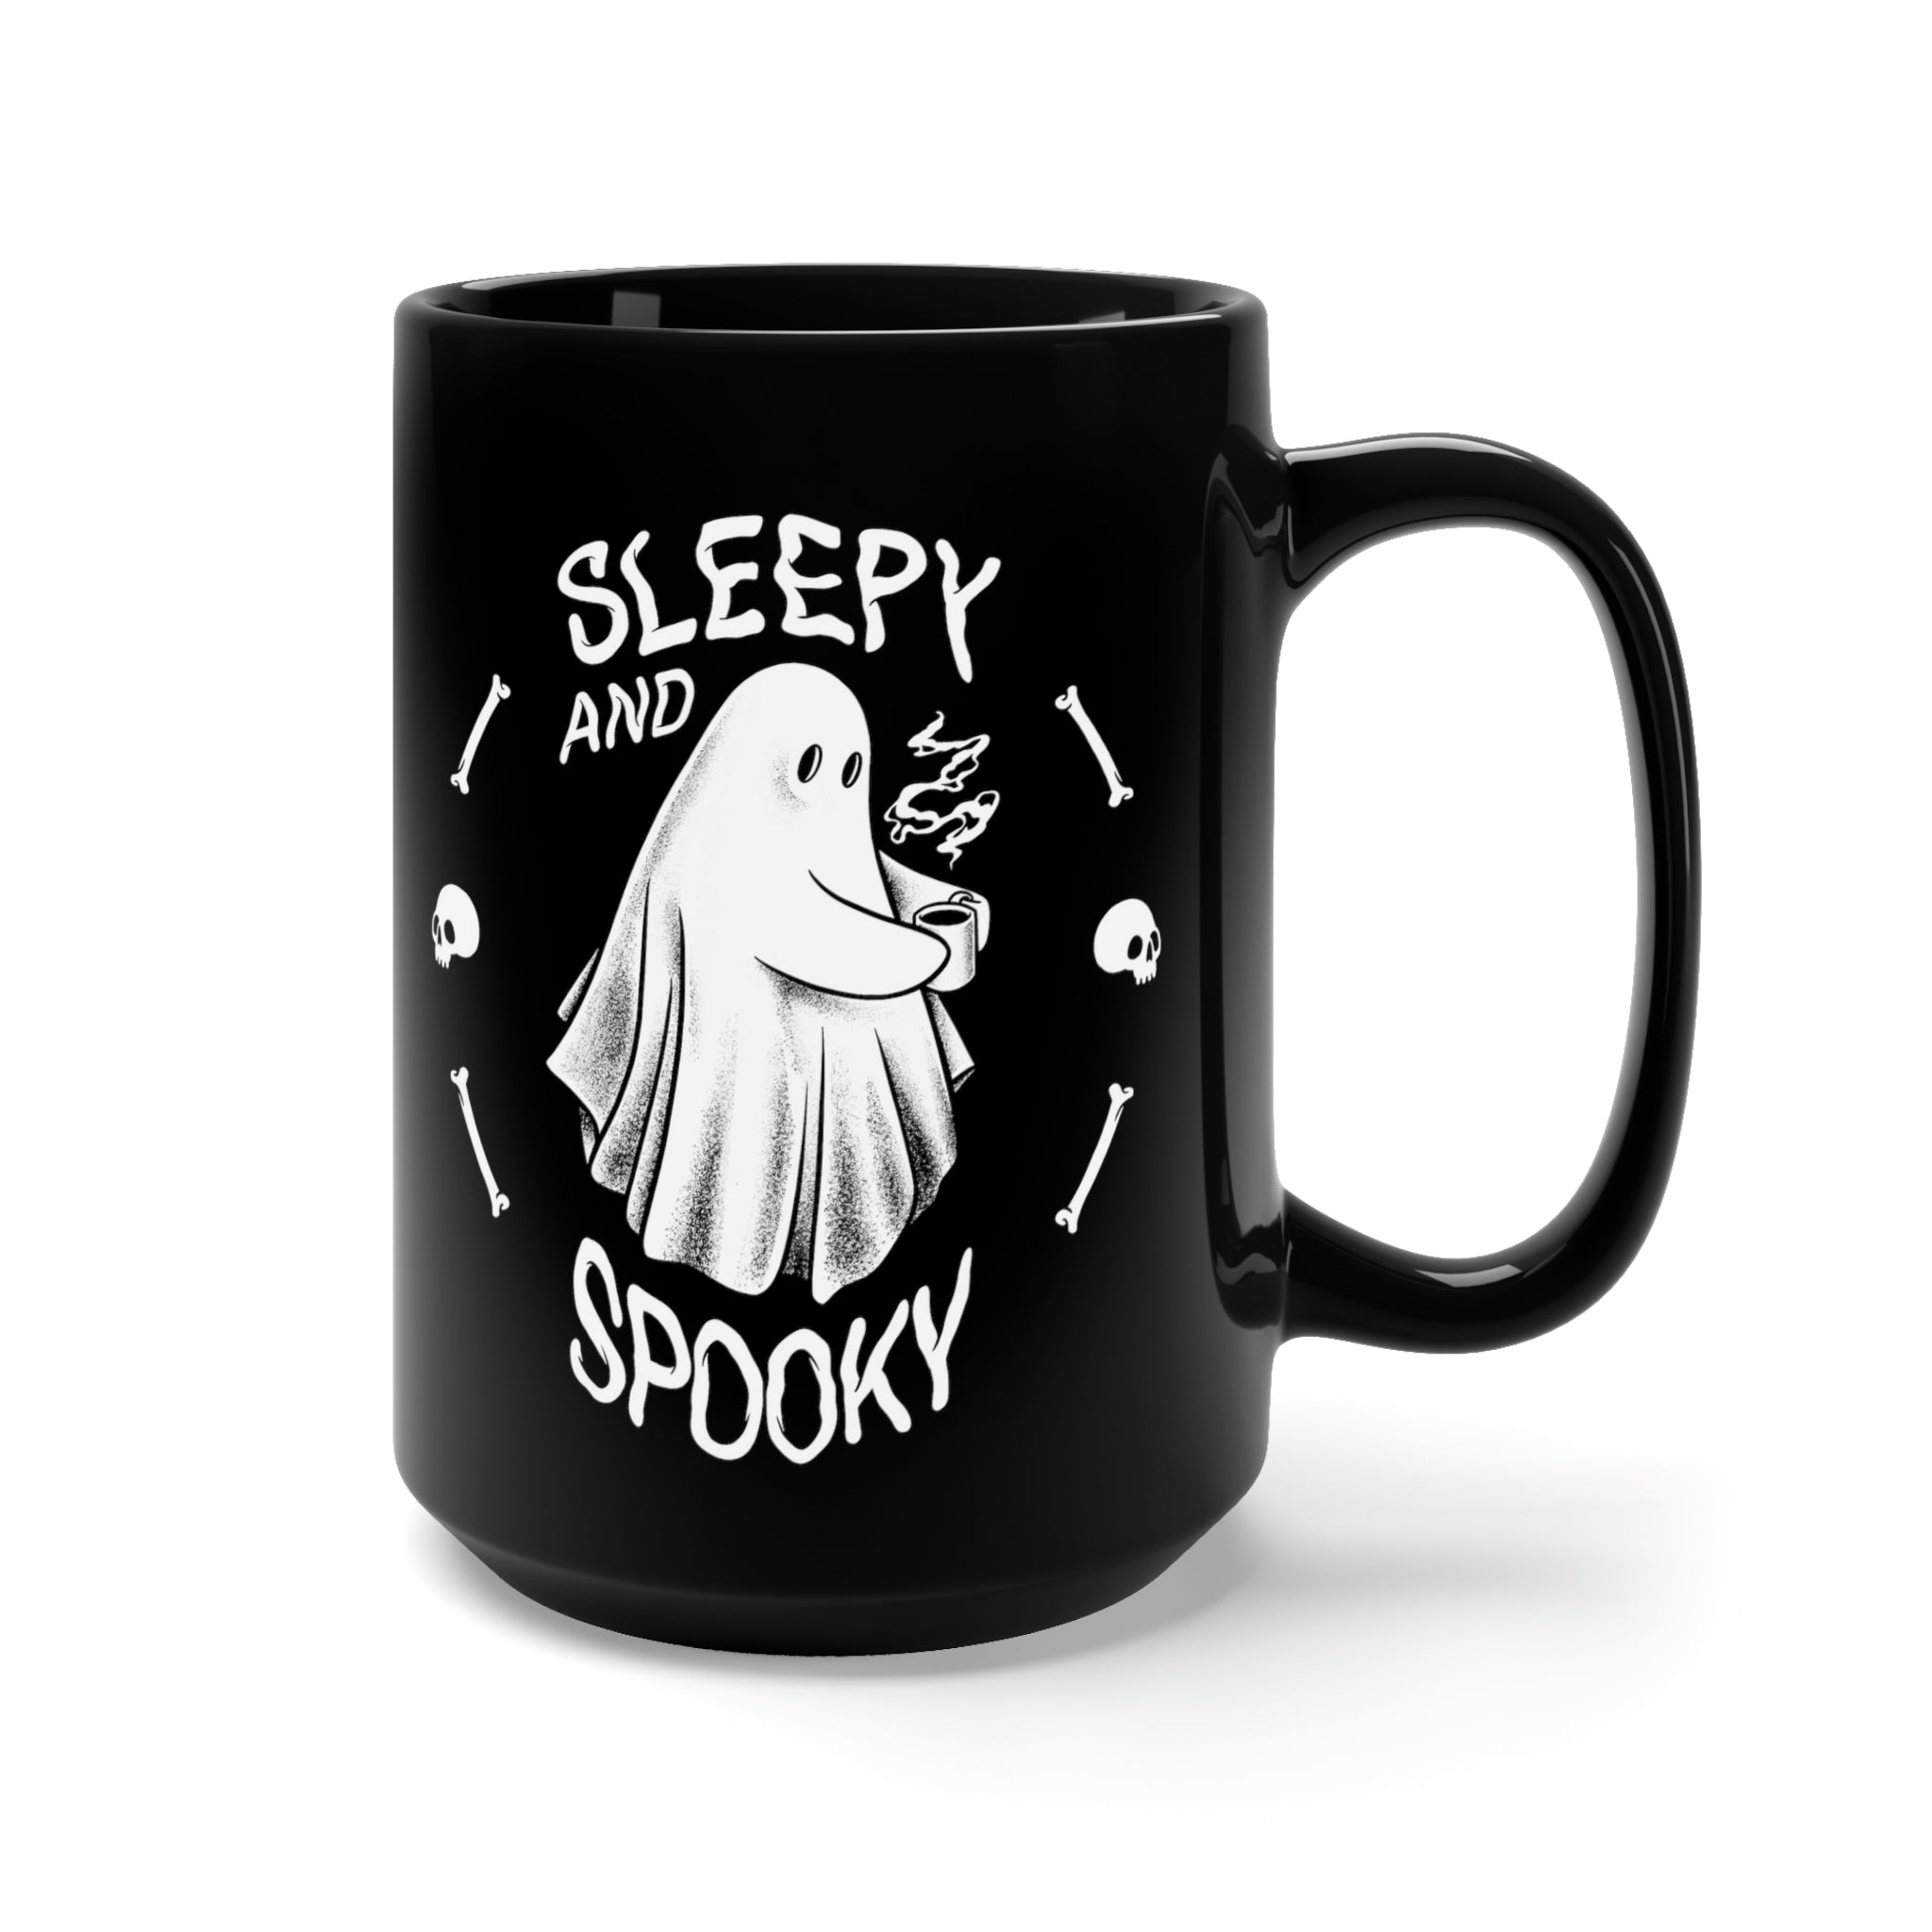 Sleepy Spooky (Mug) - Stay Cozy Clothing